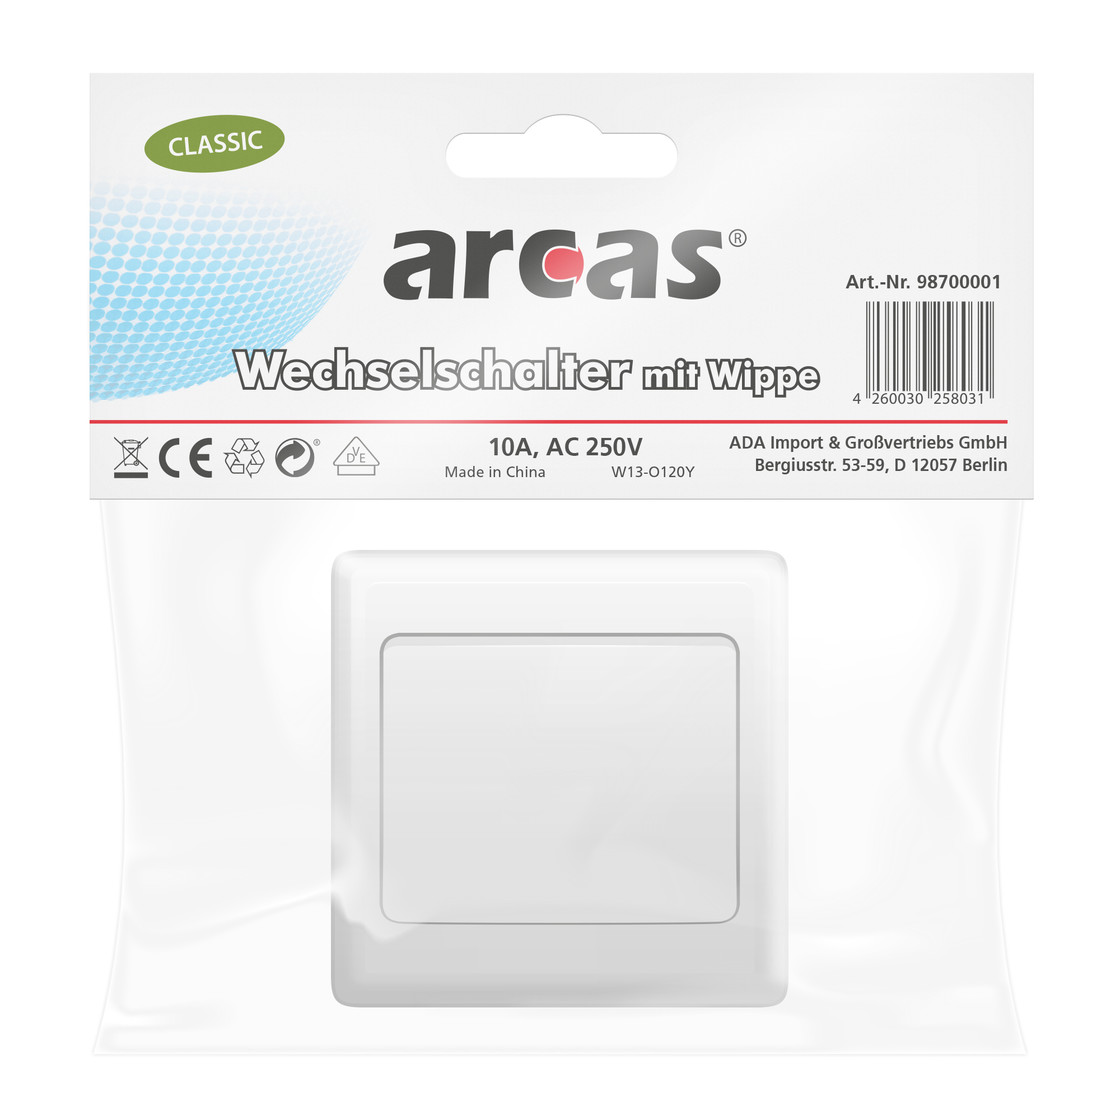 Arcas CLASSIC Wechselschalter mit Wippe Modell W13-O120Y